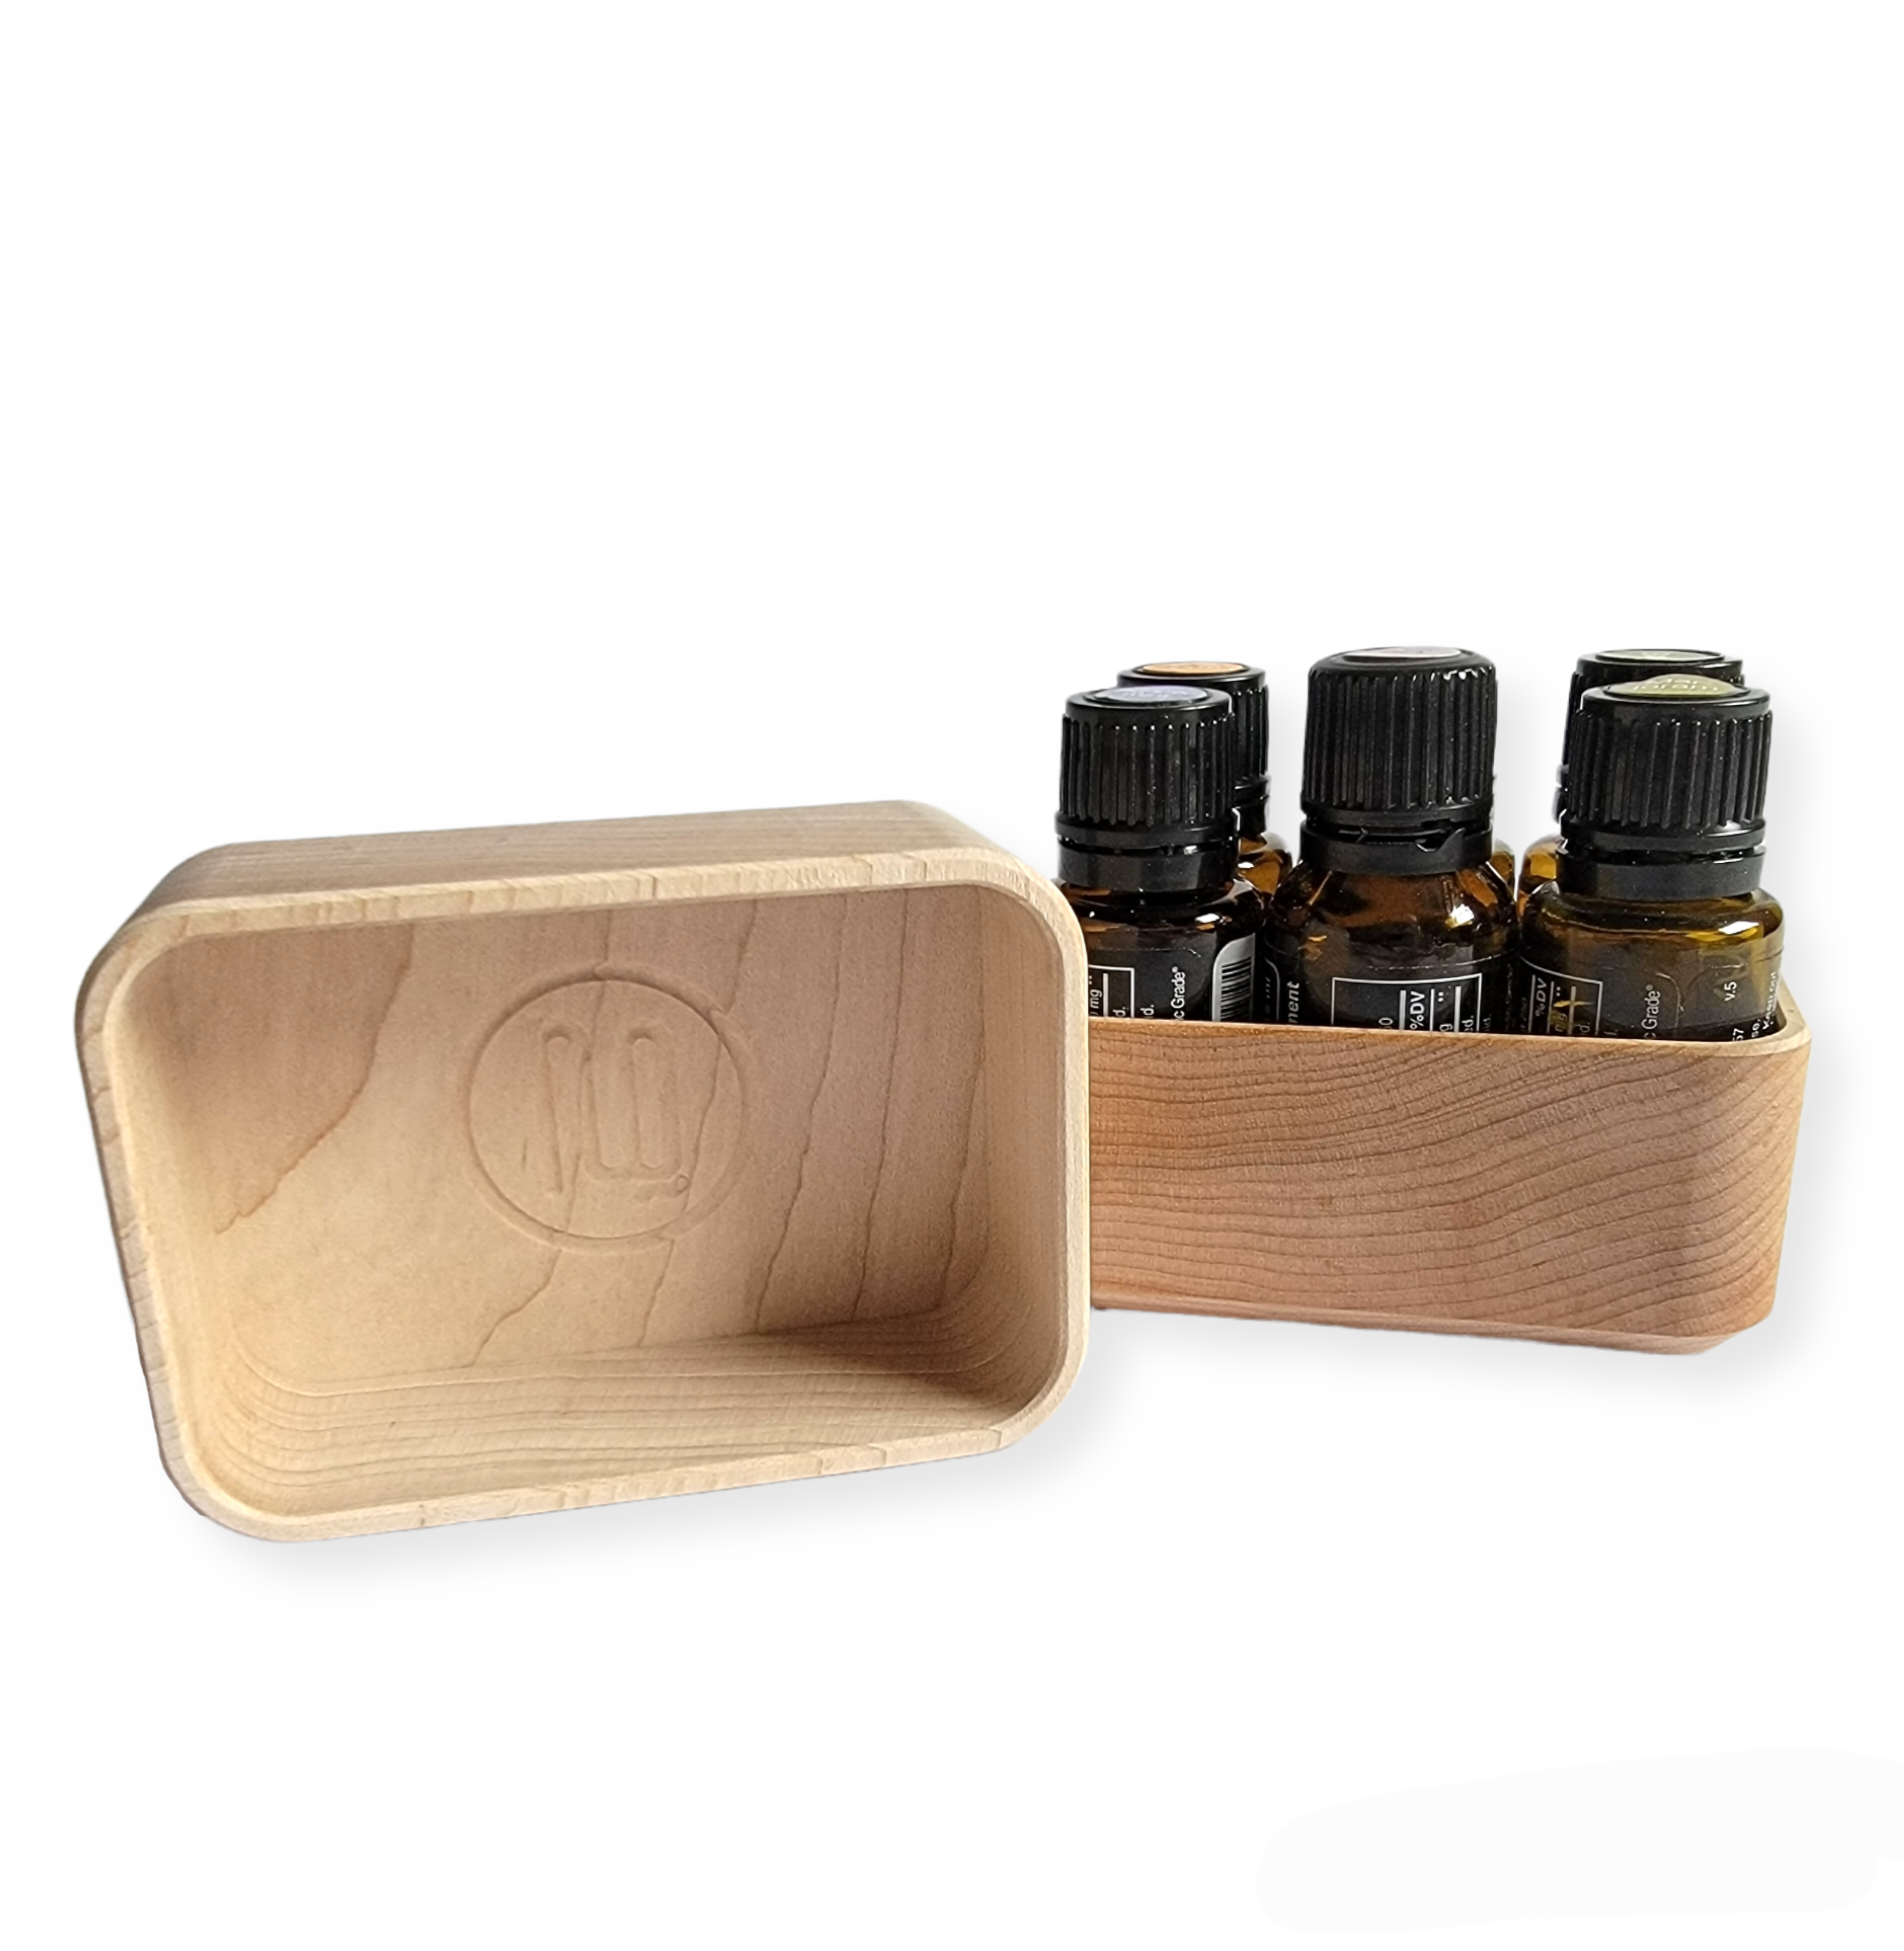 Hinokiju's popular essential oil multi-pack gift box - U-shaped